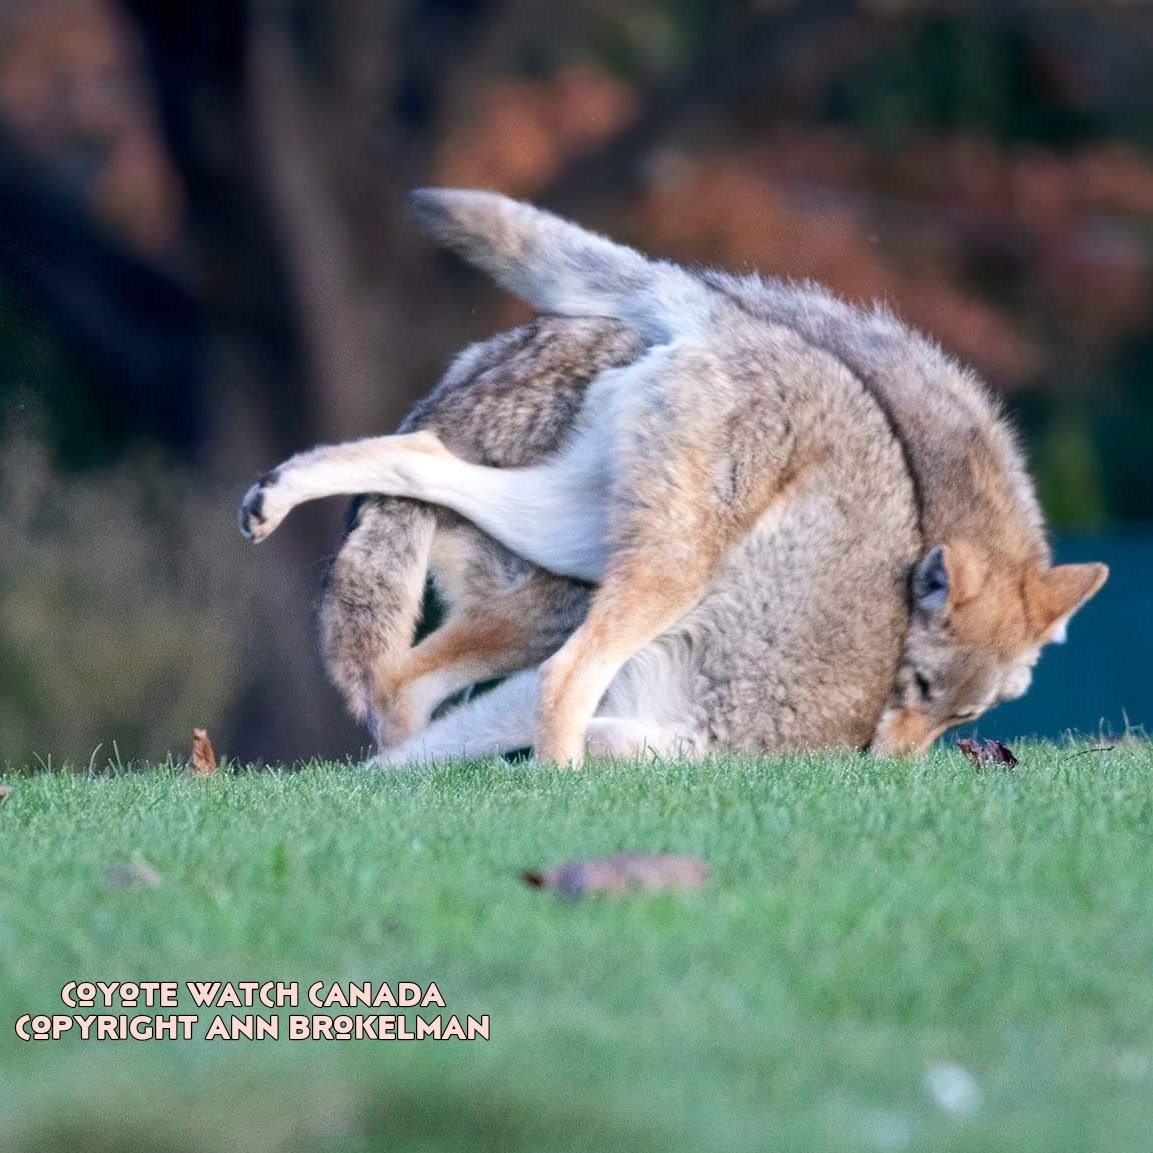 - Motivation Monday -

Coyotes love to play. Often.

How often do you play?

#canidfamily #coyotes #MotivationMonday #animalplay #wildlife #coyotesRcool #coyotefamily #onpoli #nature